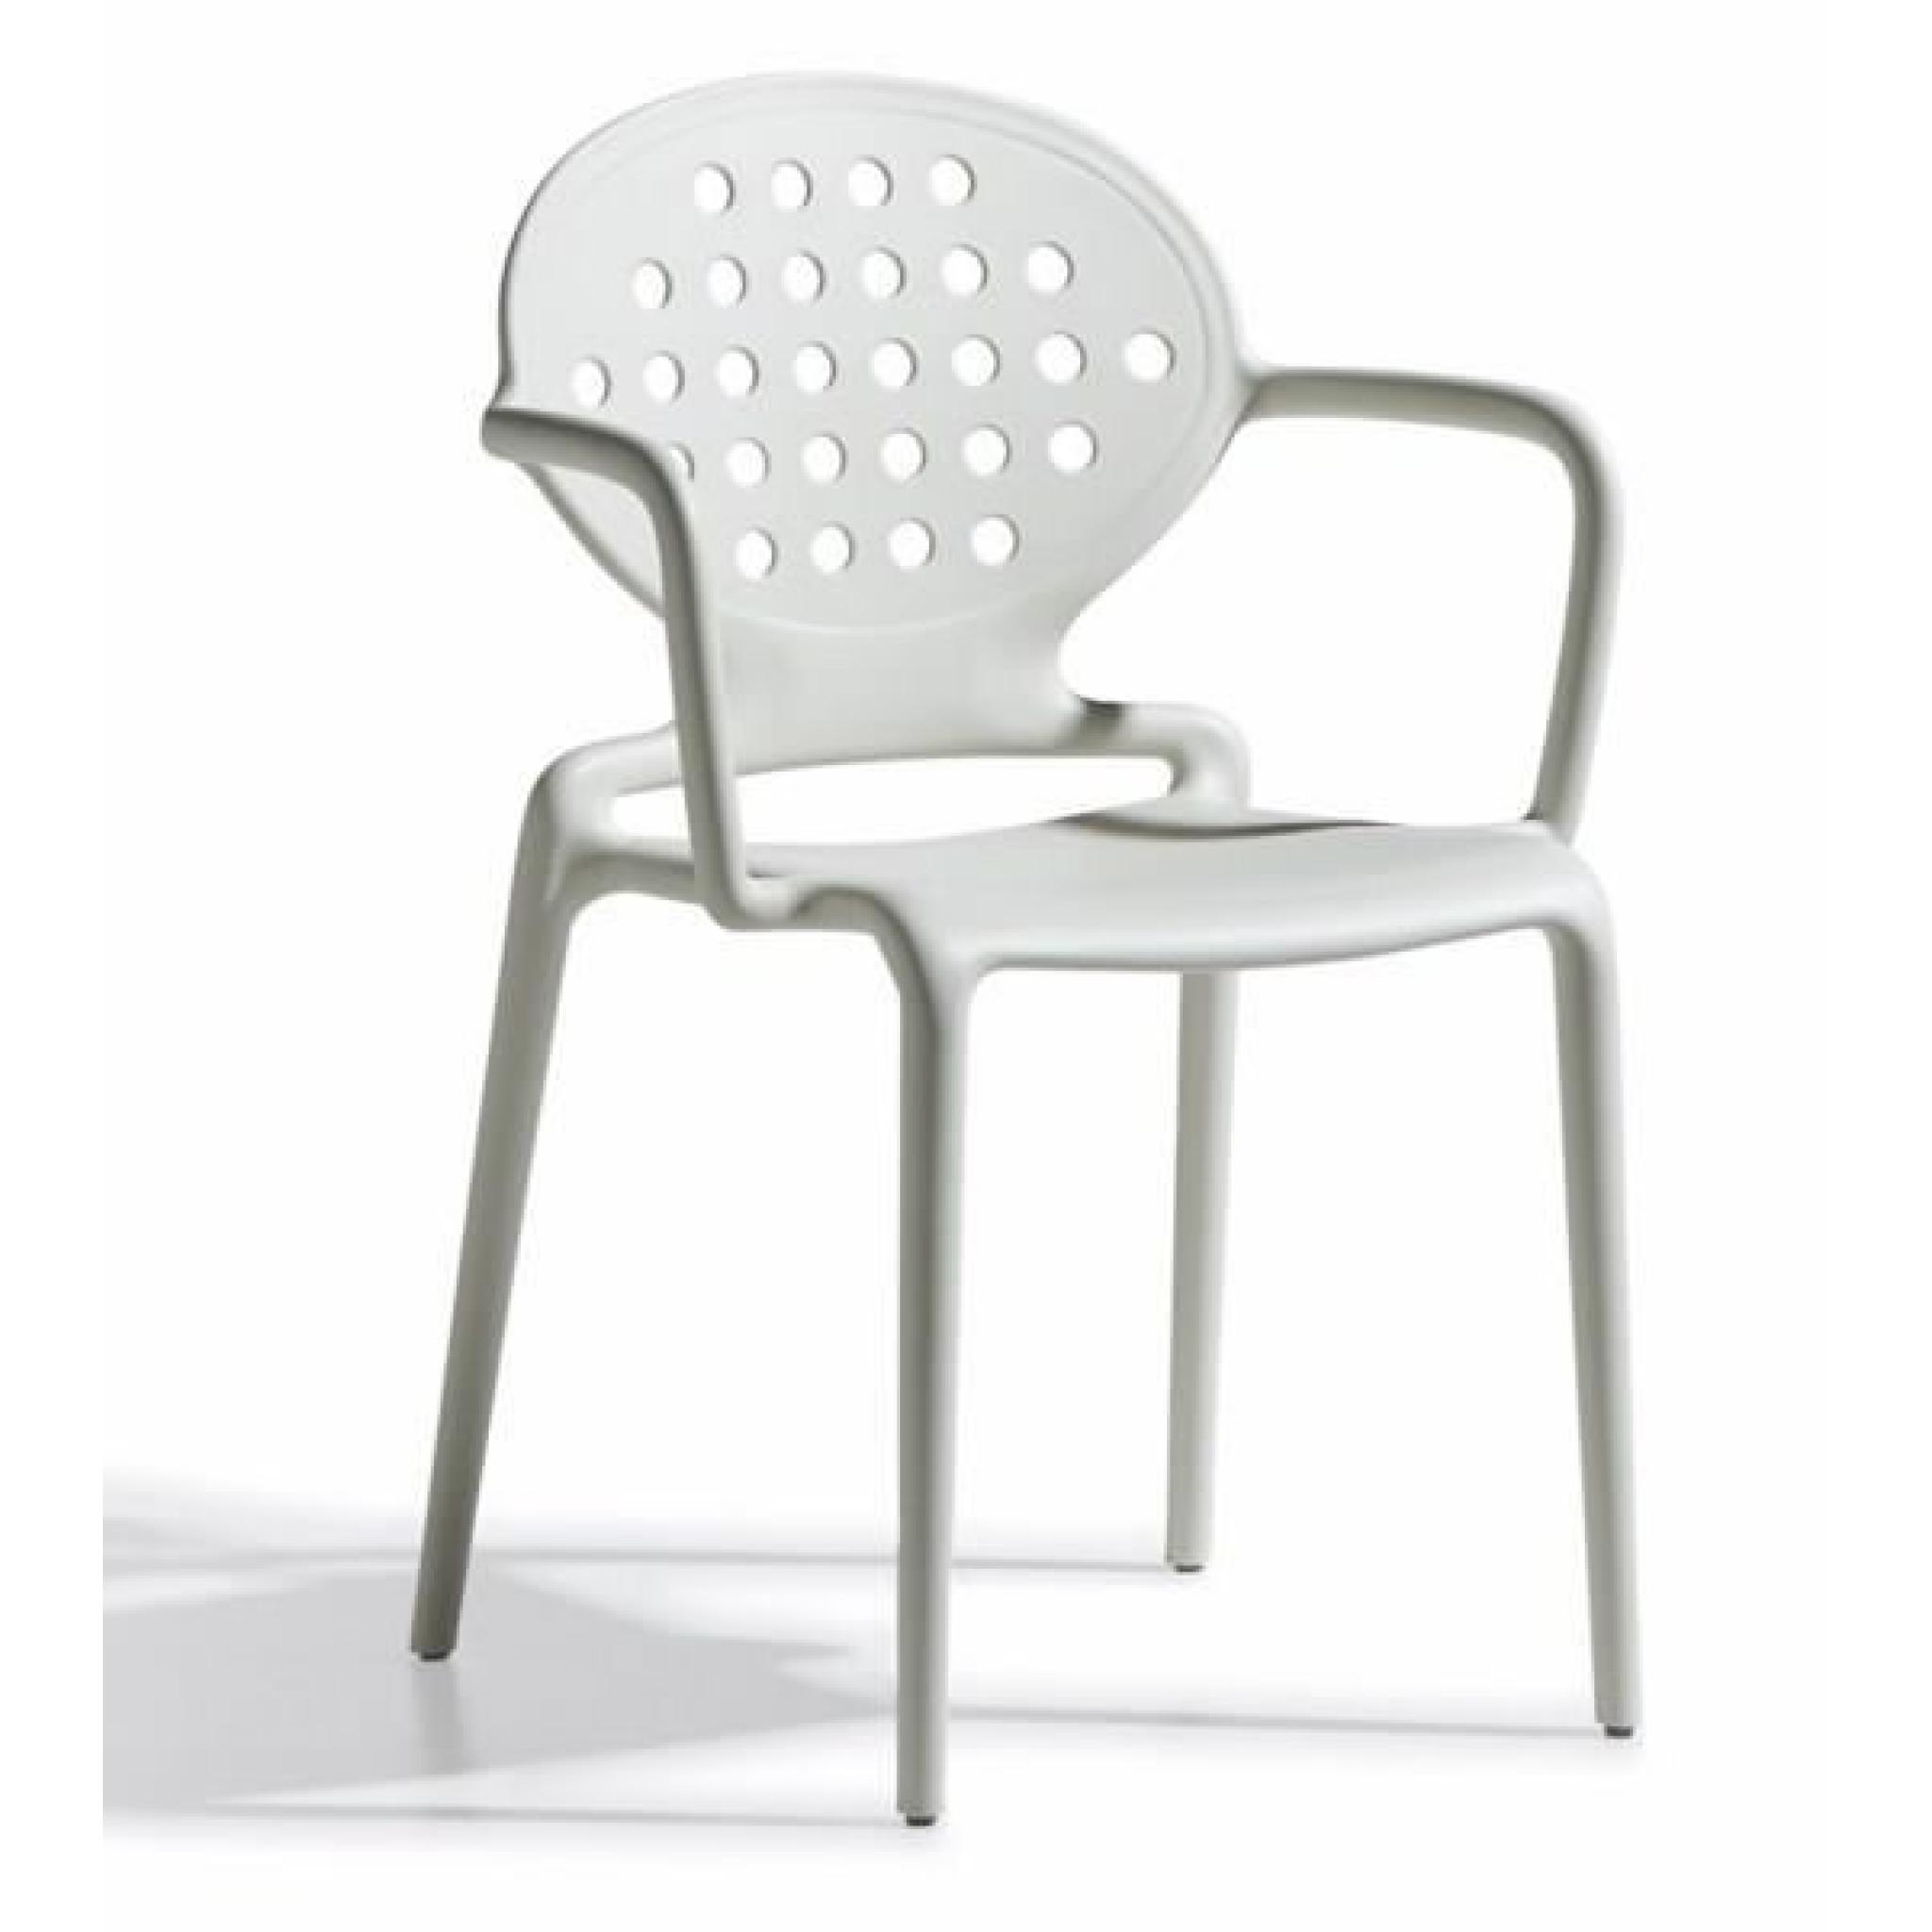 4 Chaises design blanches avec accoudoirs - COL… pas cher